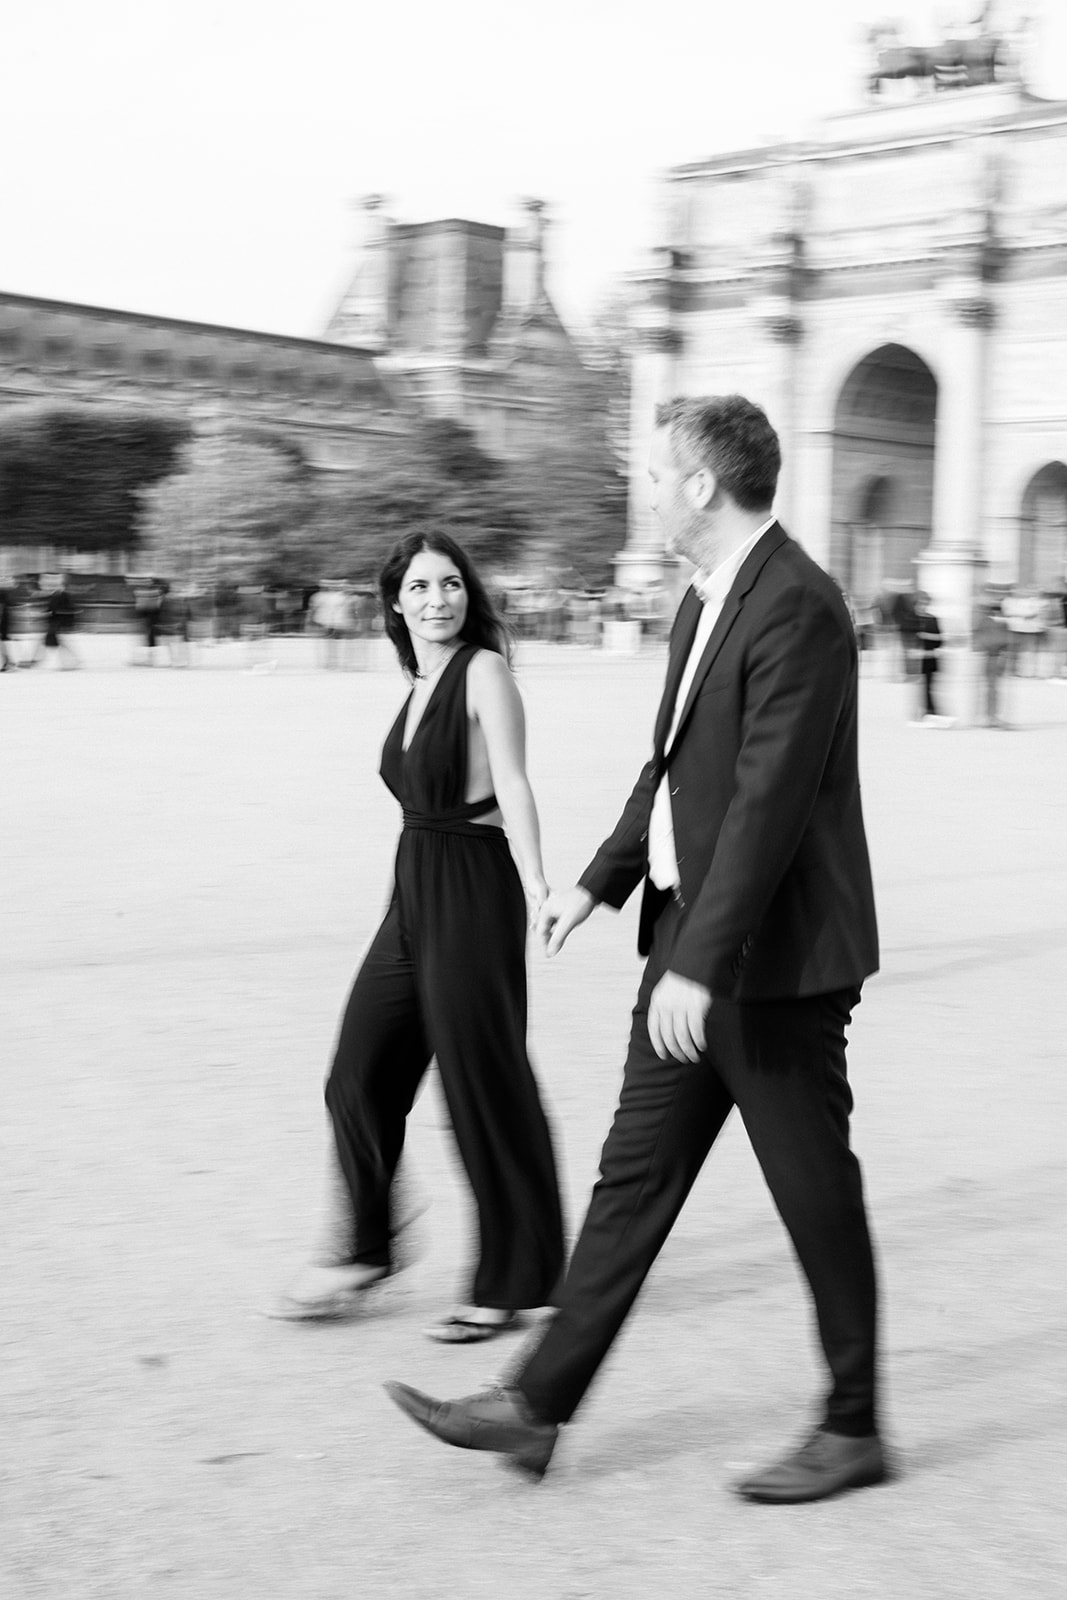 Romantic Engagement at the Louvre in Paris  